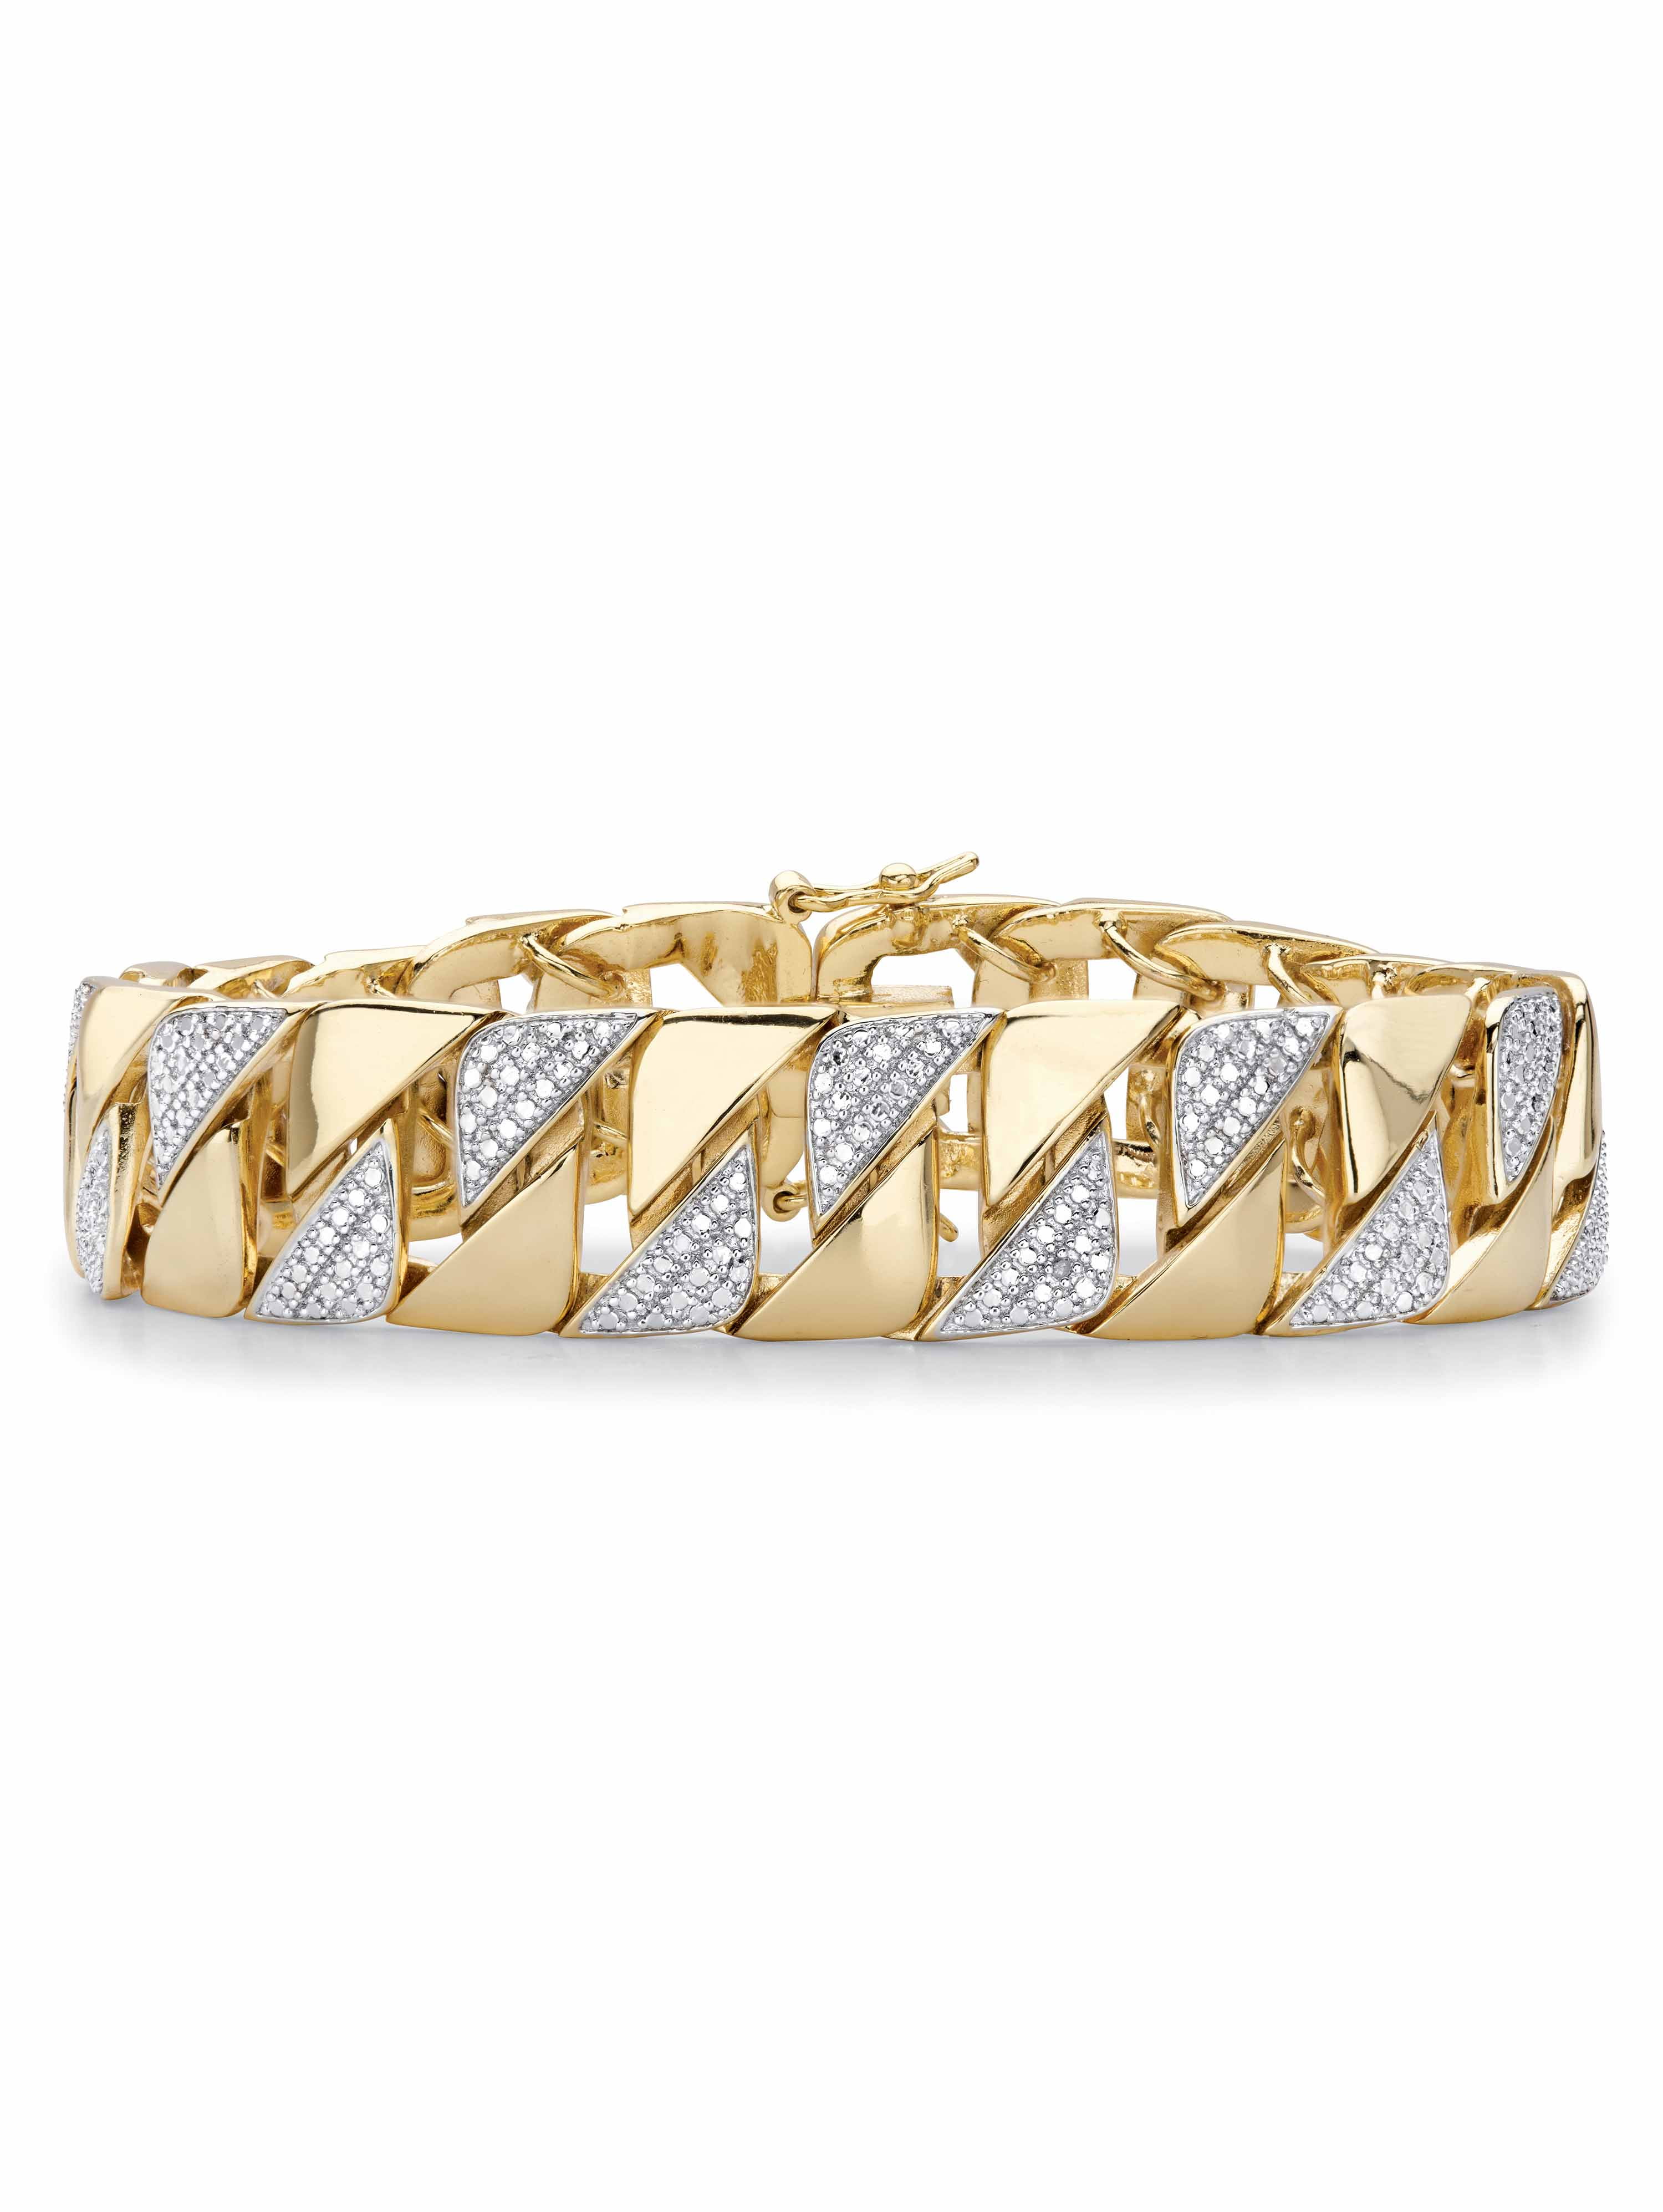 18k Gold Luxury Full Diamond Bracelet Female Natural Ruby Real Diamond  Bangle Wedding Birthday Party Gift - Bracelets - AliExpress